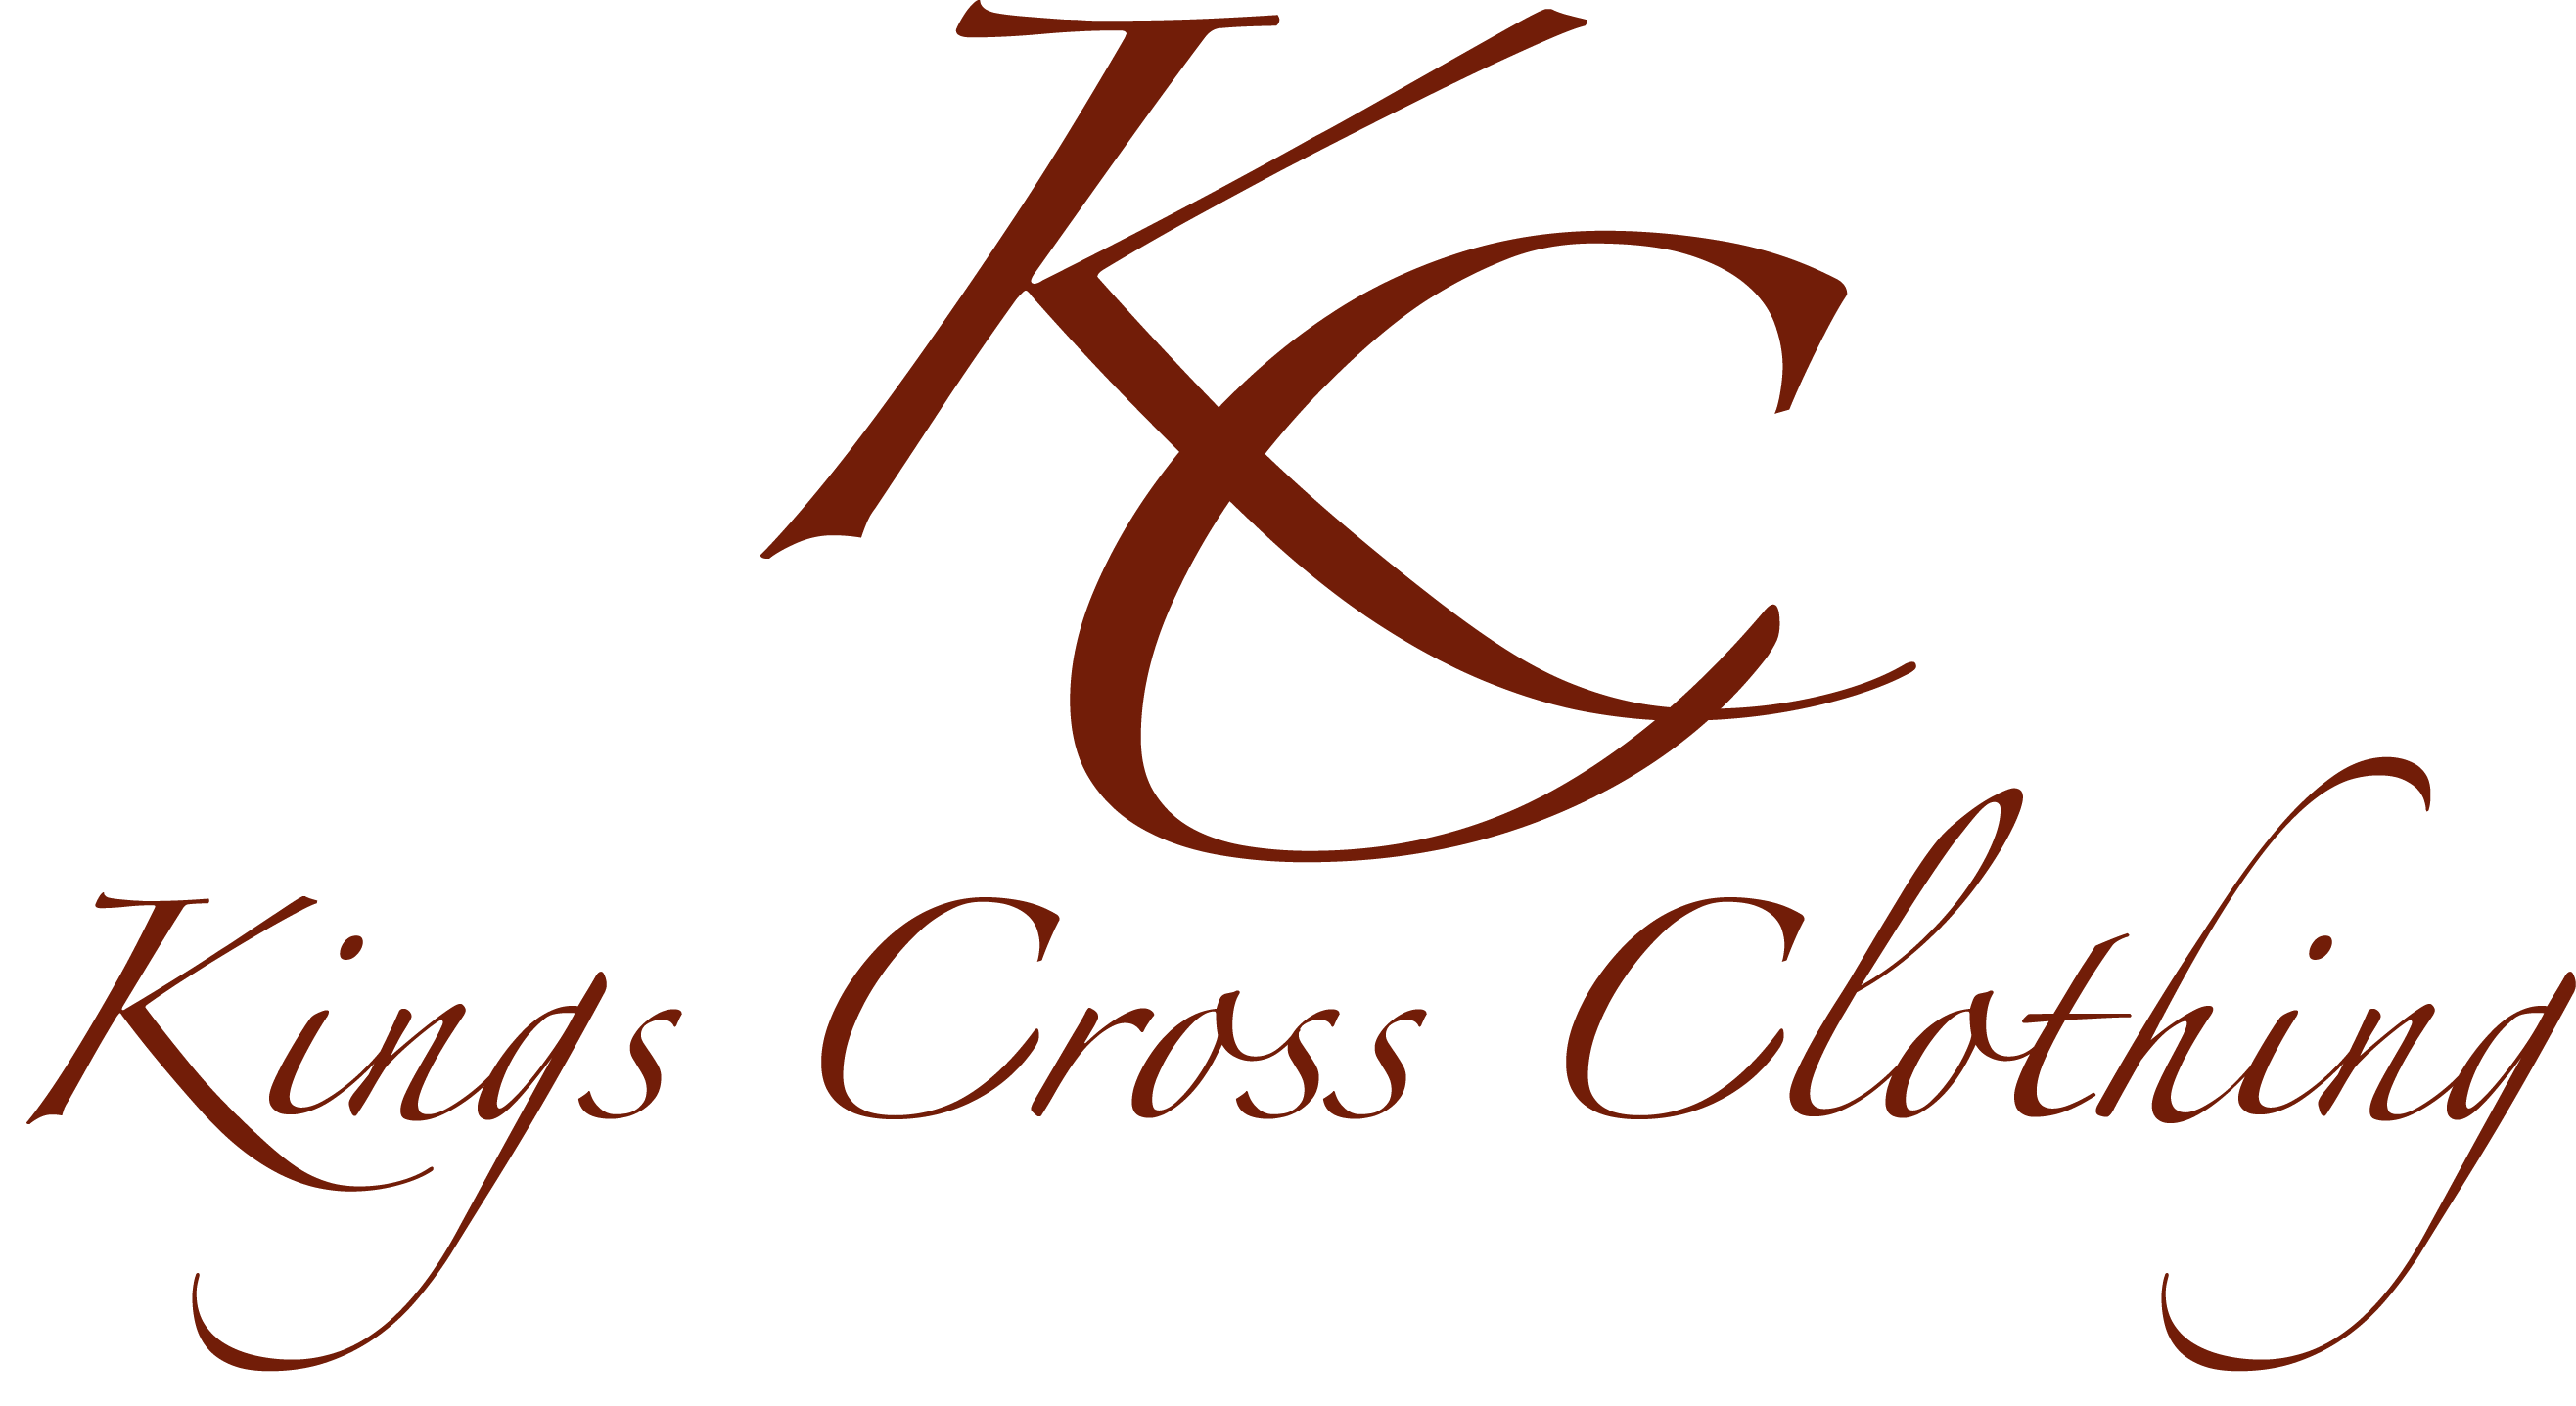 Kings Cross Clothing